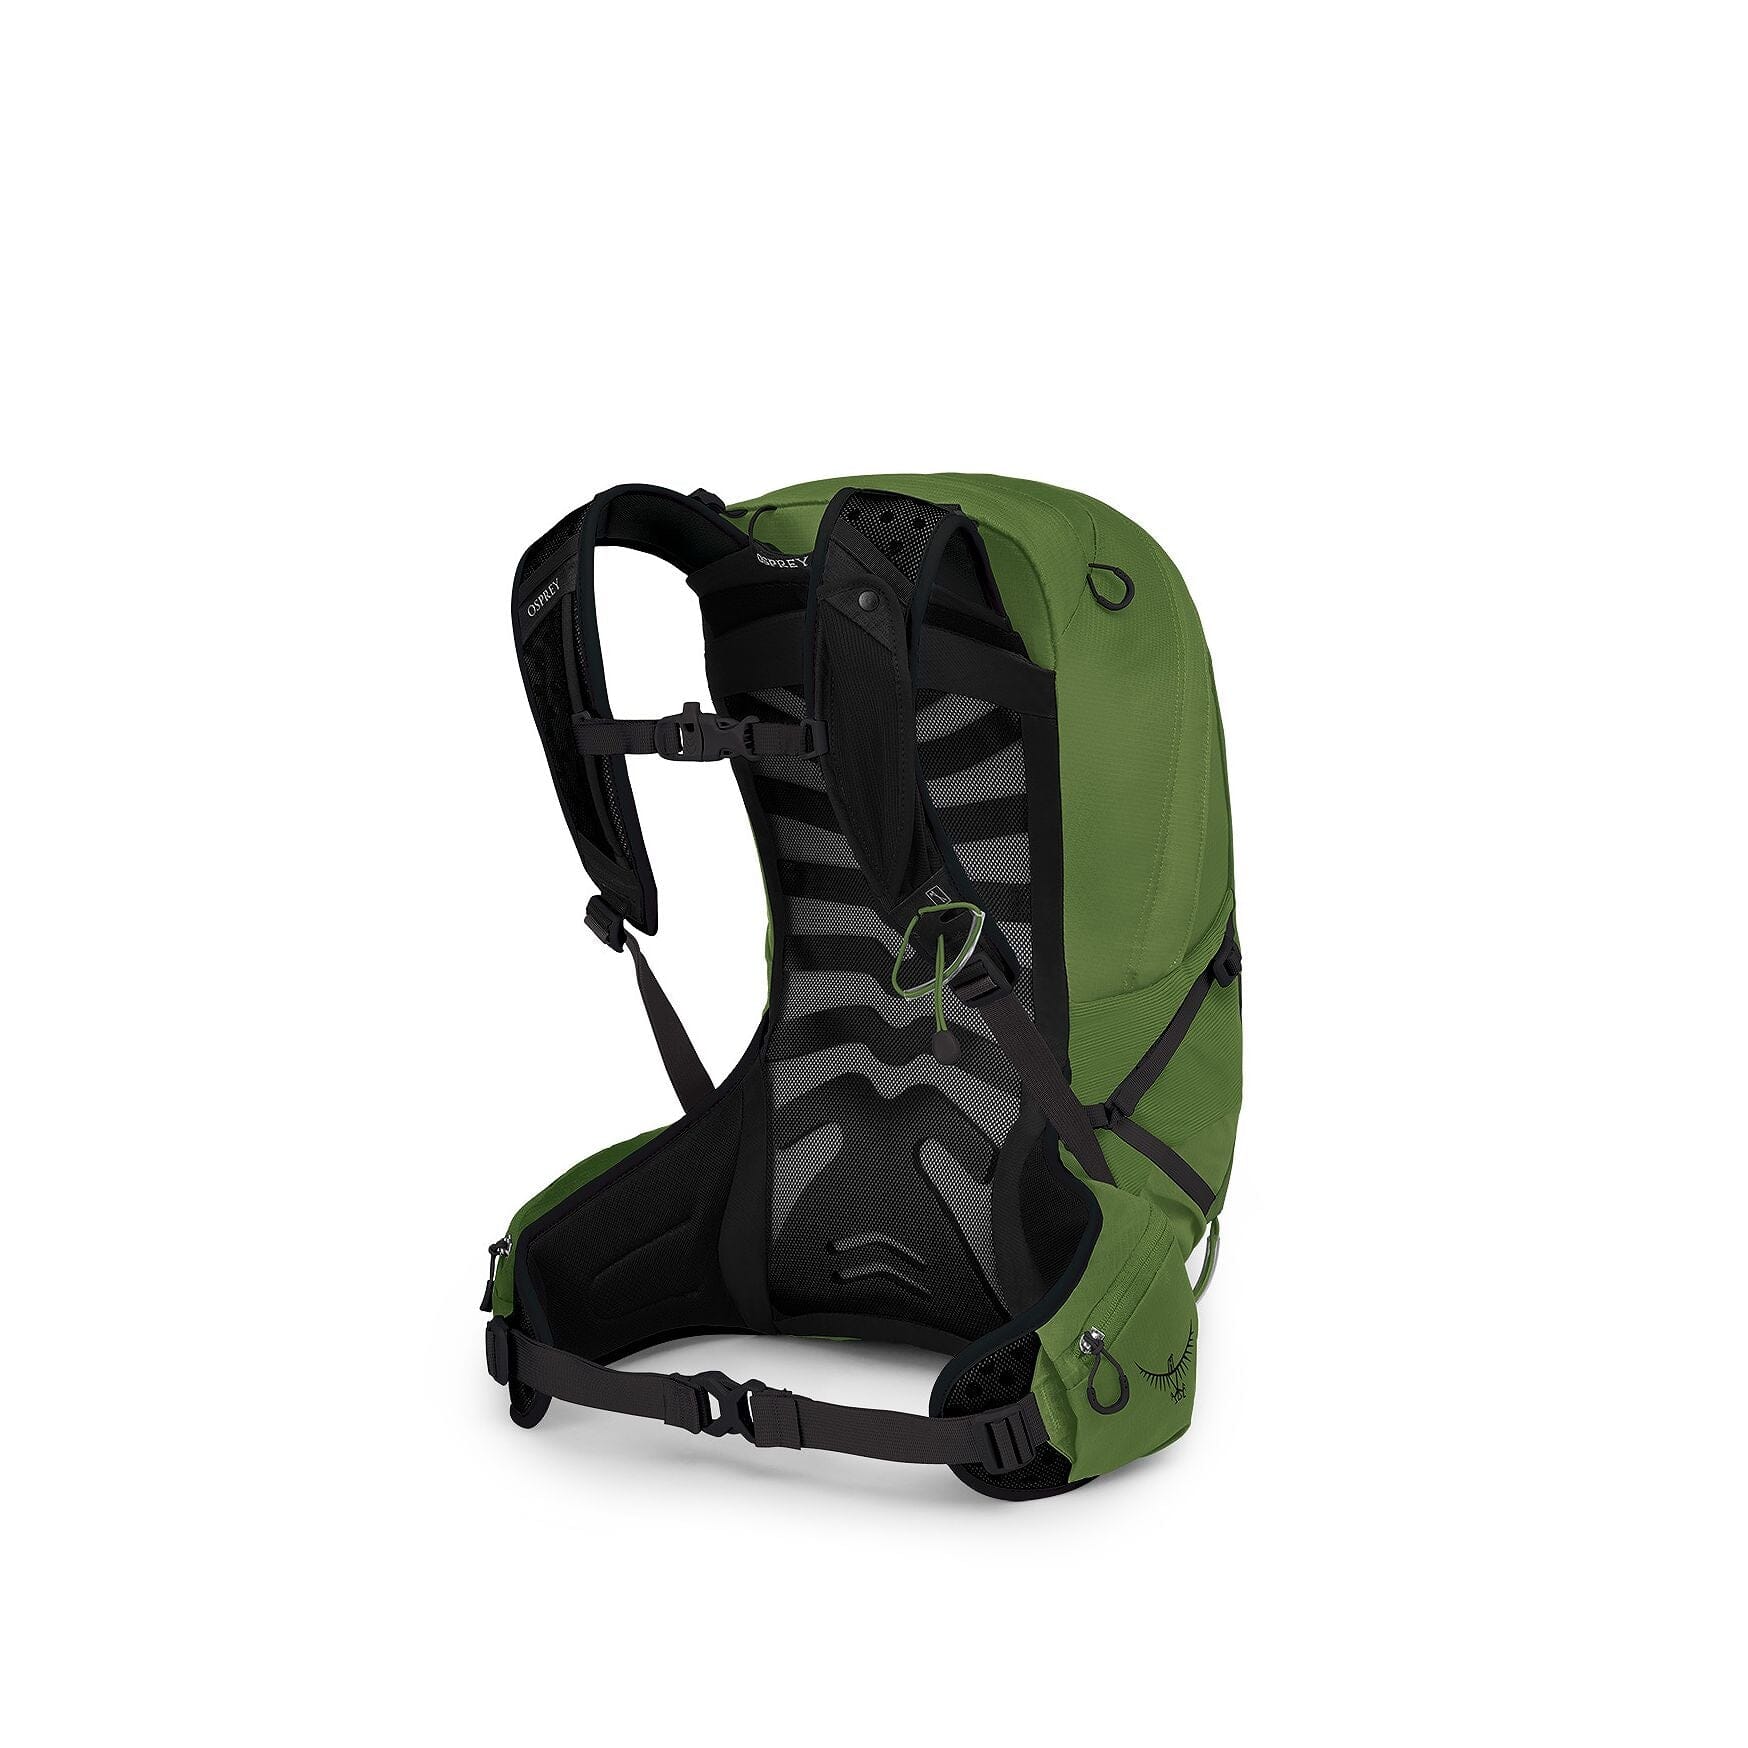 Osprey Talon 22 Men's Day Hiking Backpack Green Belt Black (S24) L/XL 